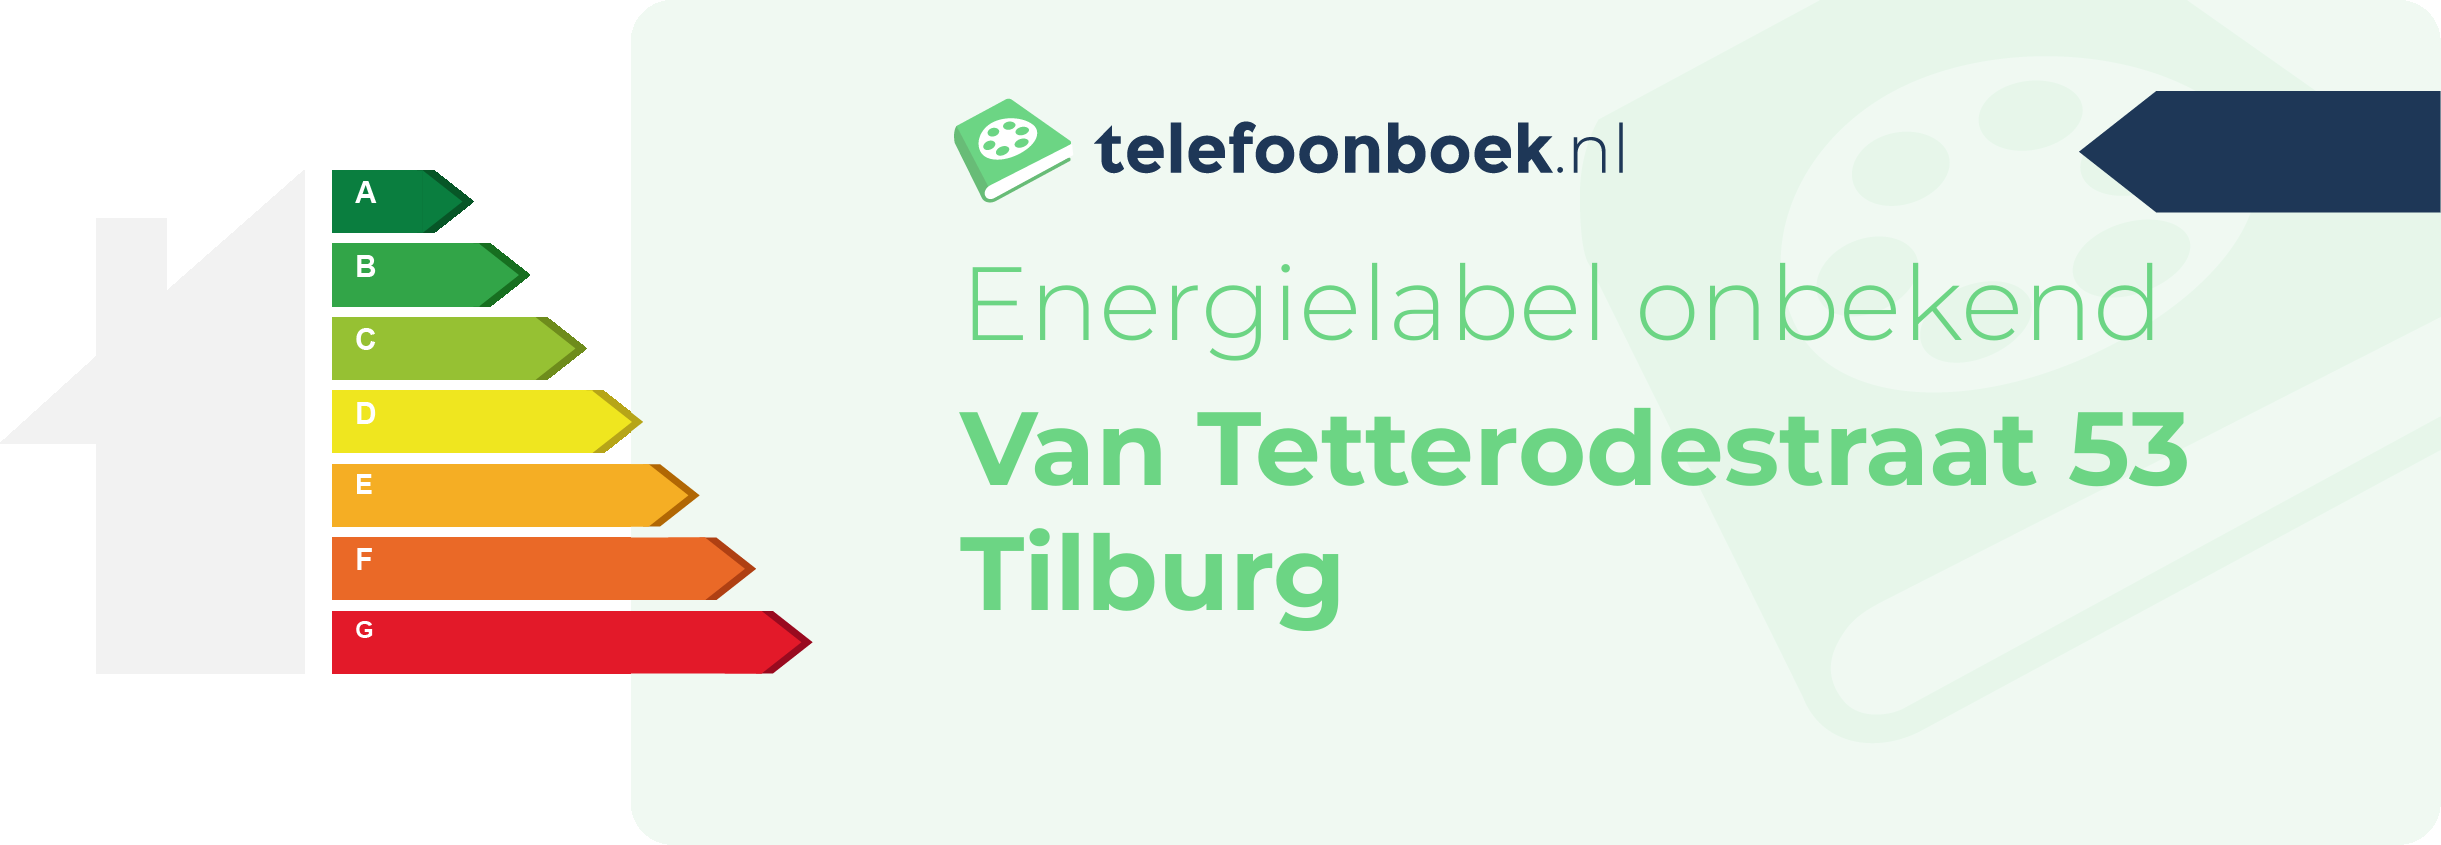 Energielabel Van Tetterodestraat 53 Tilburg